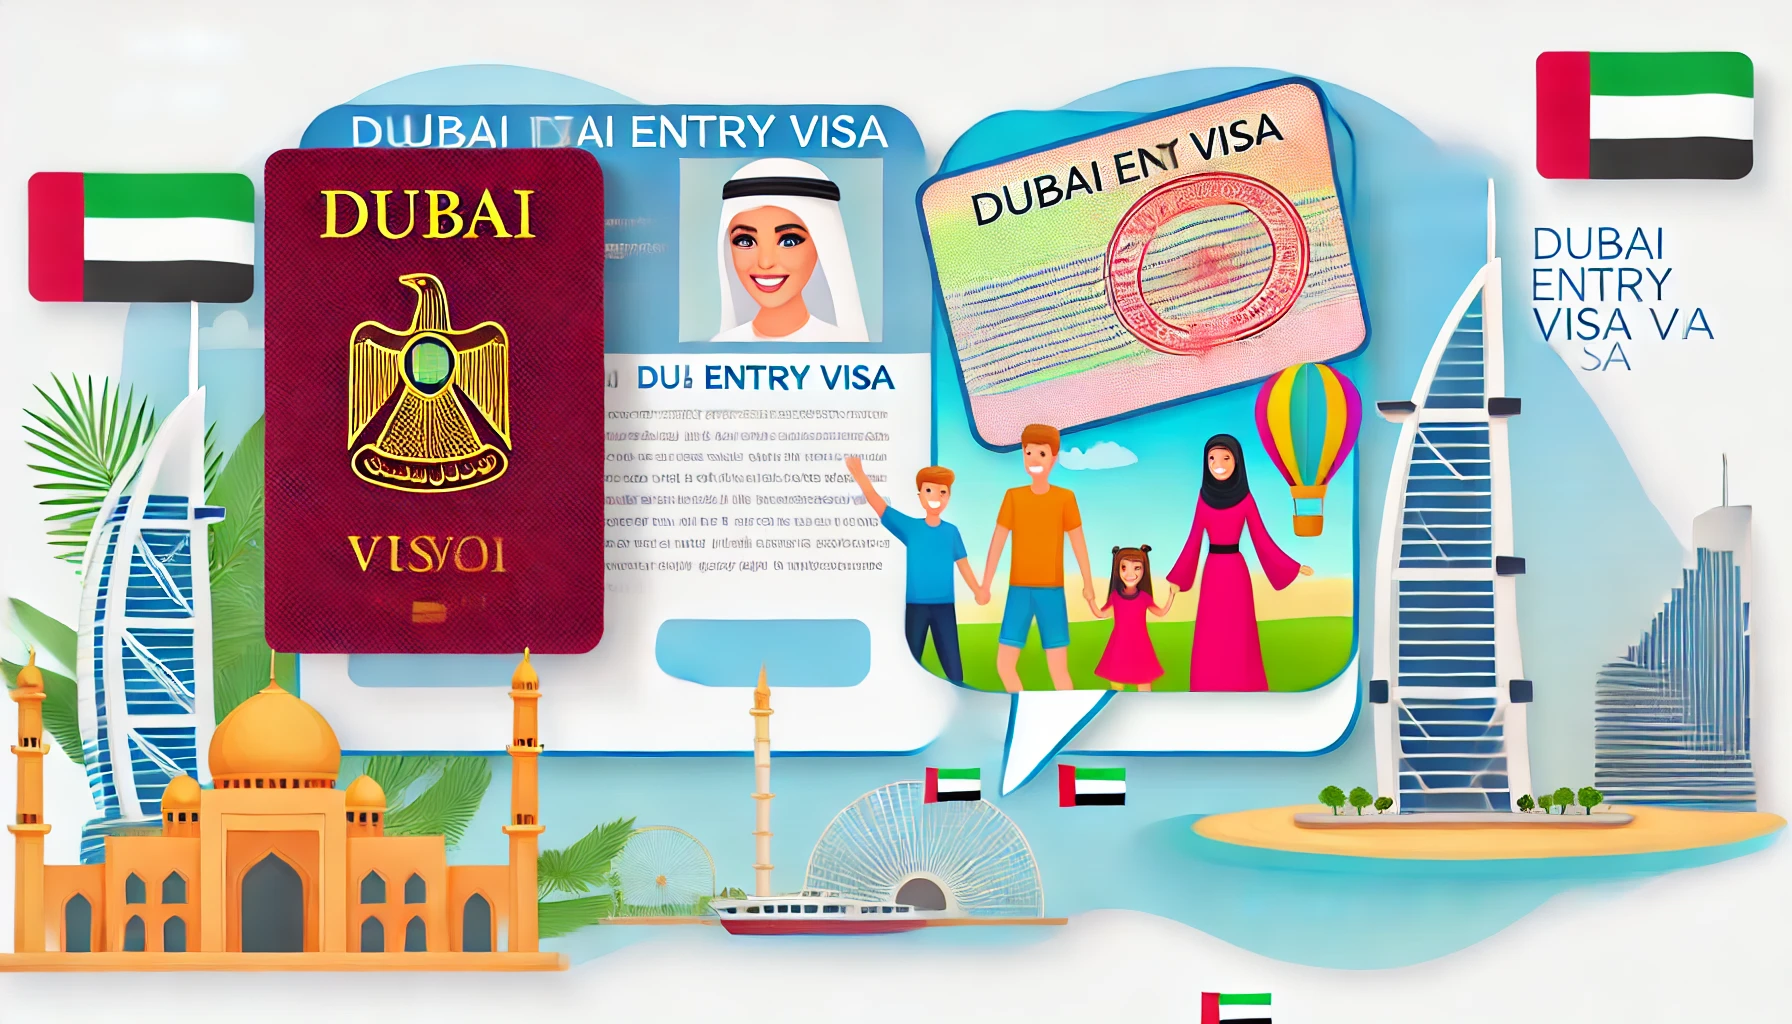 a passport with a Dubai visa stamp, a happy tourist family, and iconic Dubai landmarks like the Burj Khalifa and the Palm Jumeirah